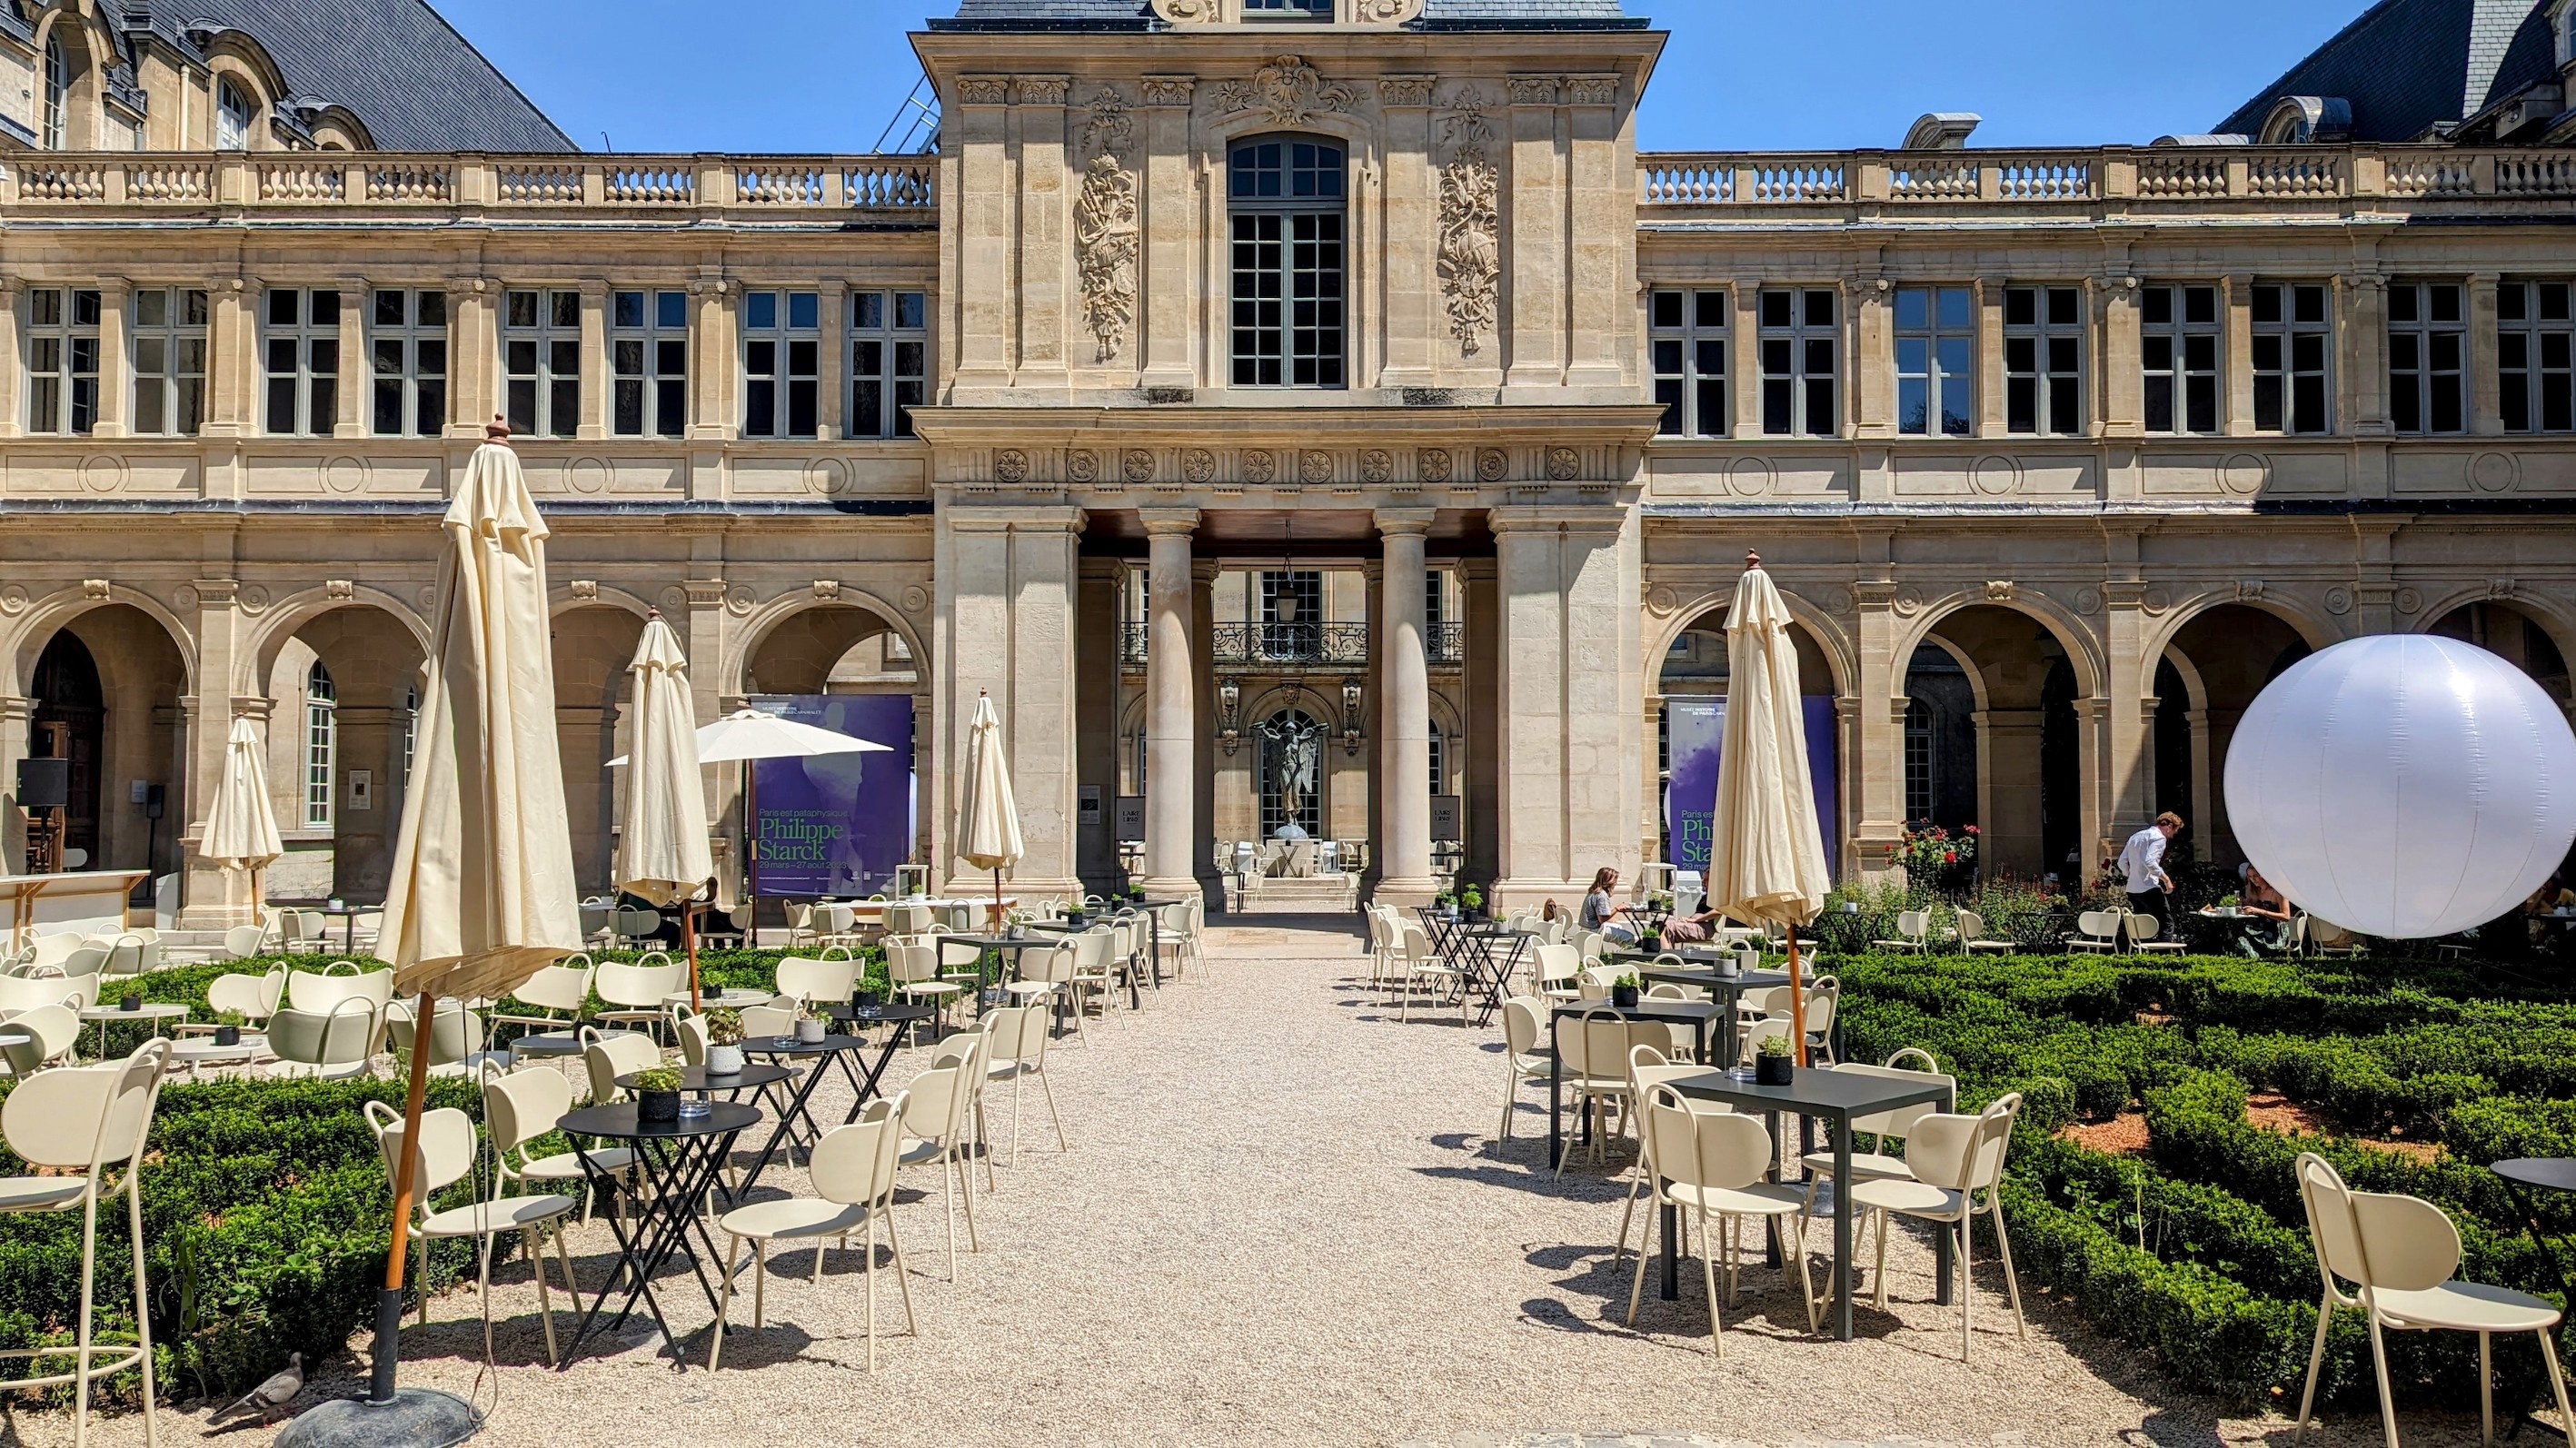 The garden of the free Carnavalet museum in Paris.